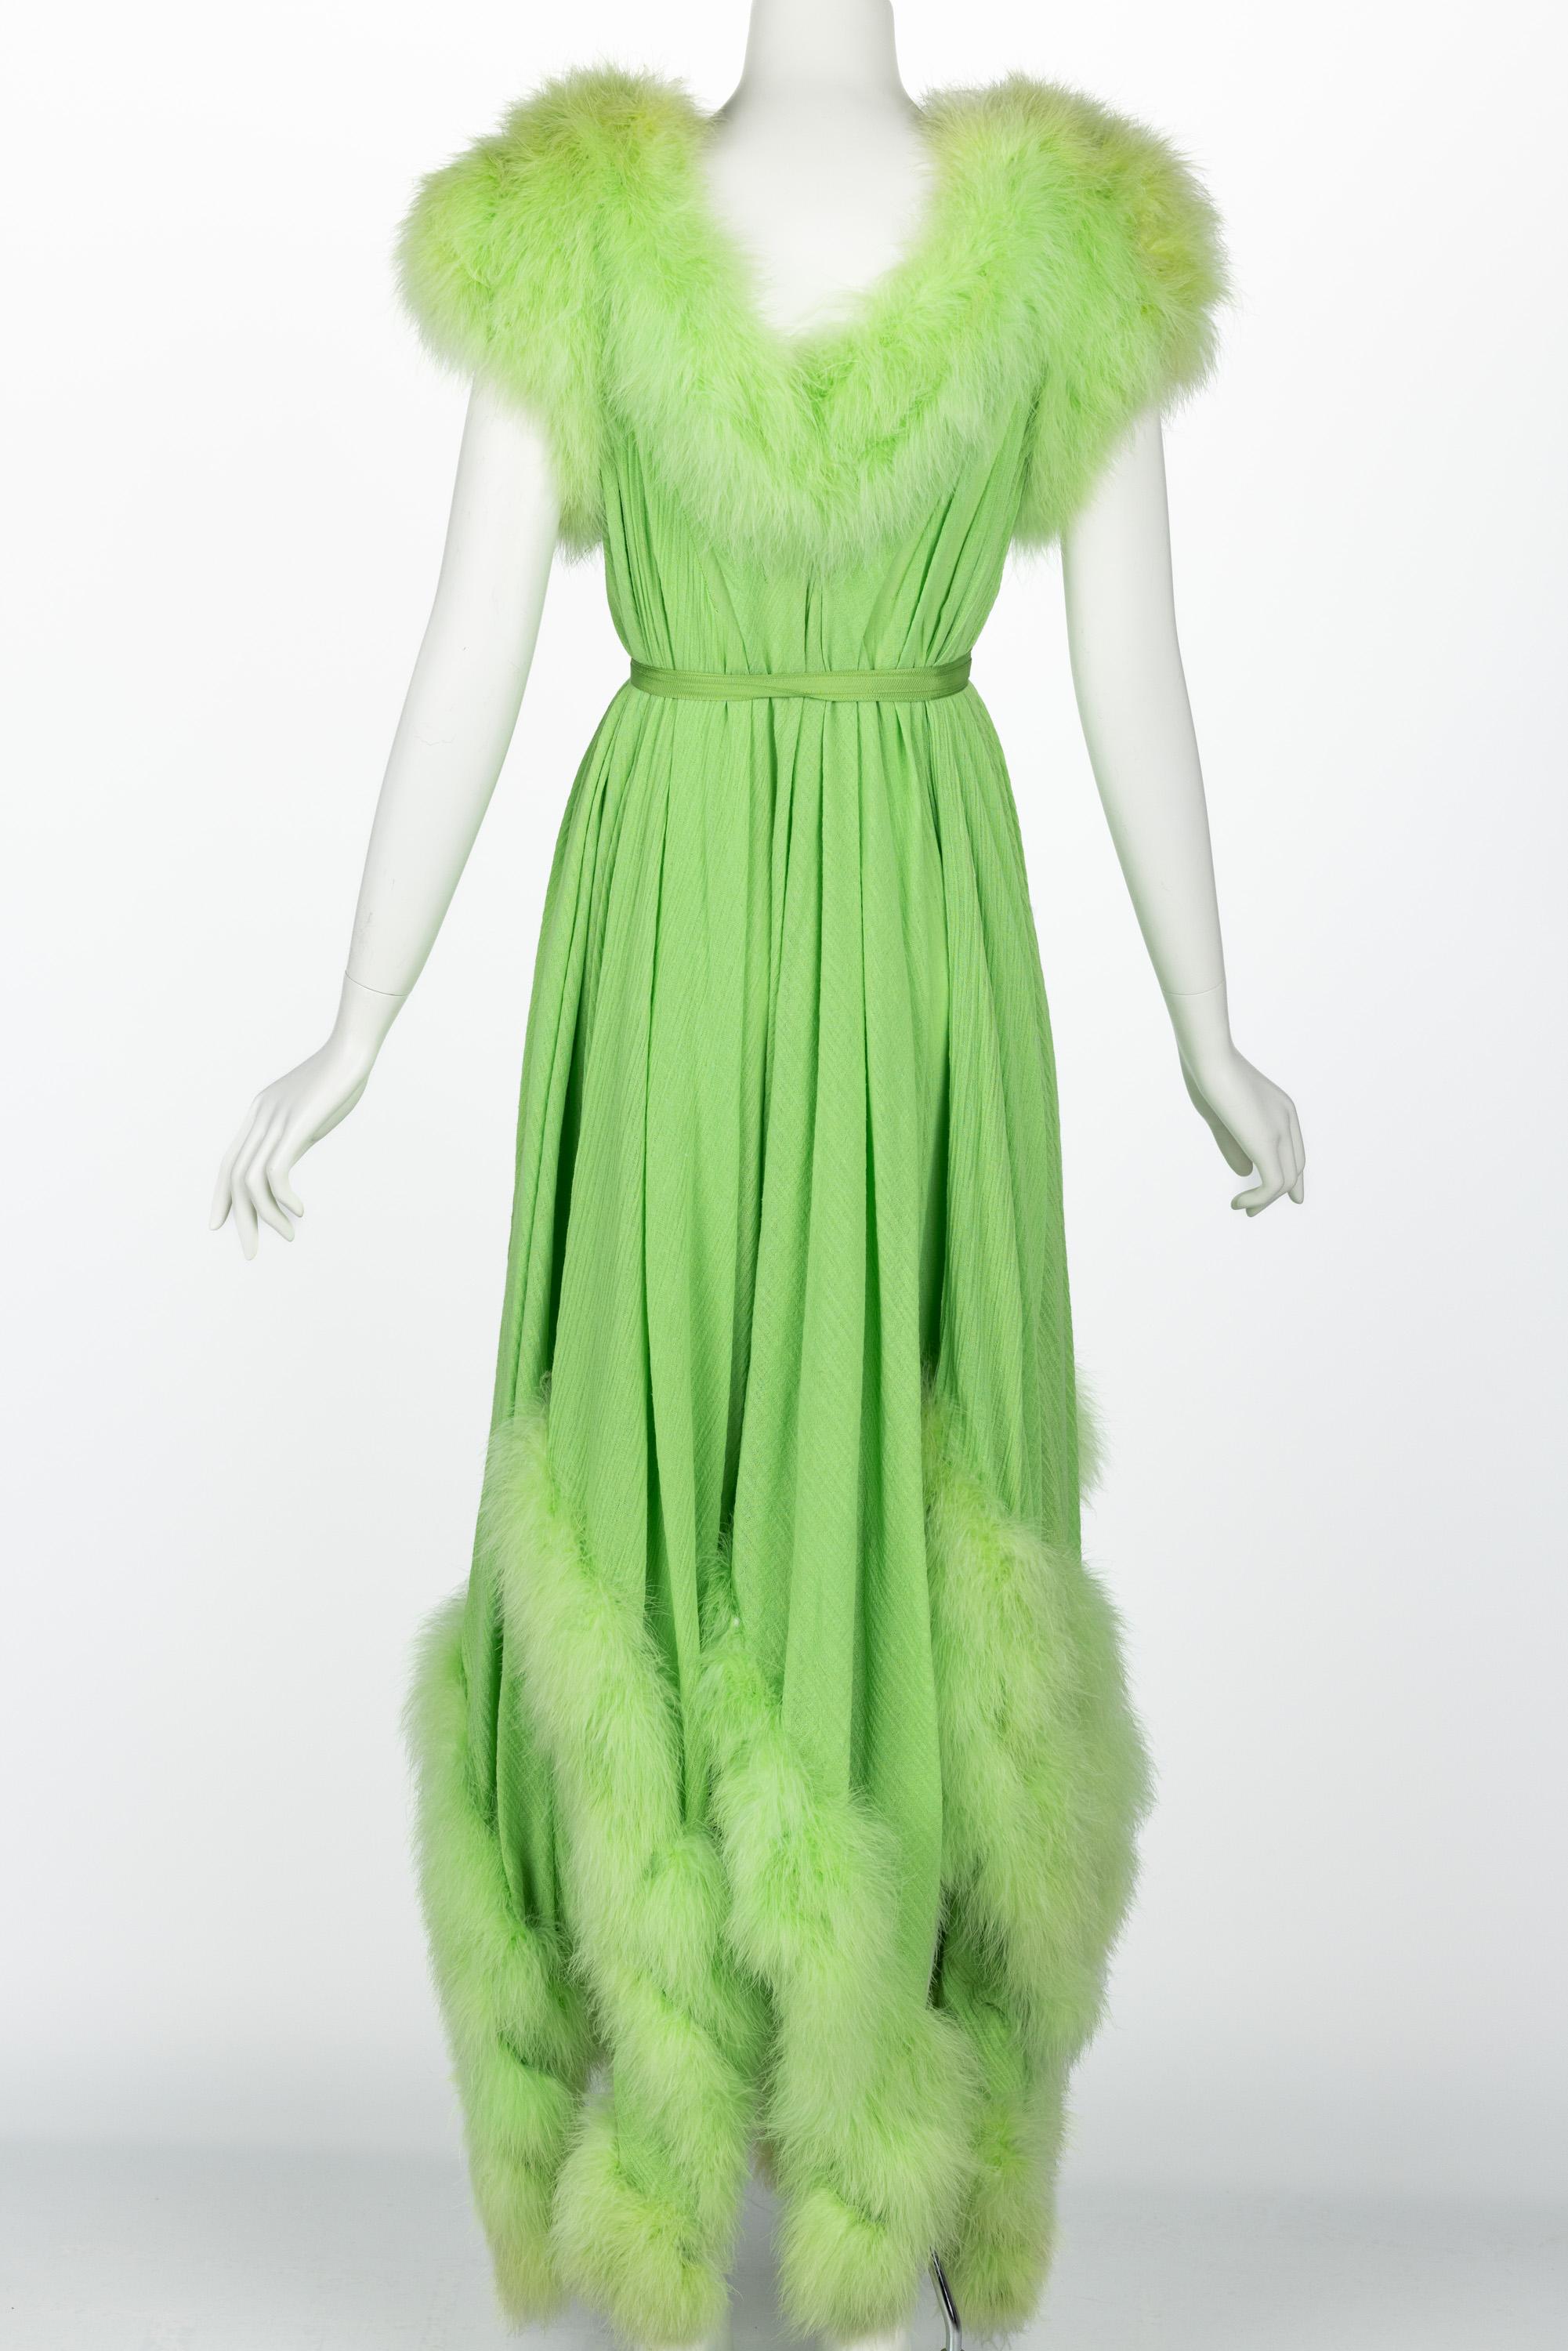 Vintage Light Green Maribou Feather Trimmed Maxi Dress  For Sale 1